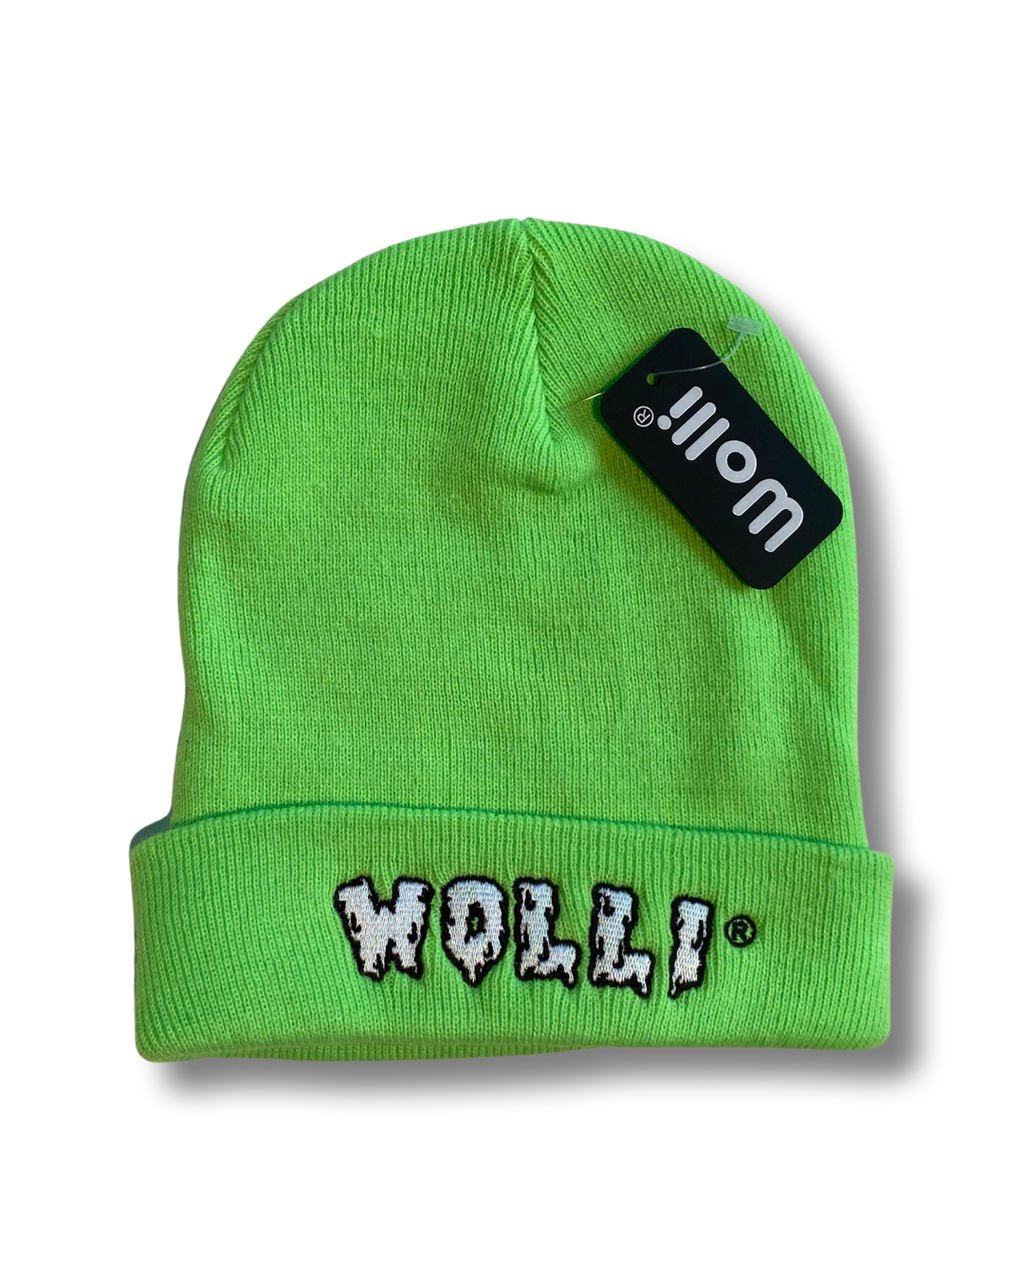 Berretta verde fluo - Wolli®